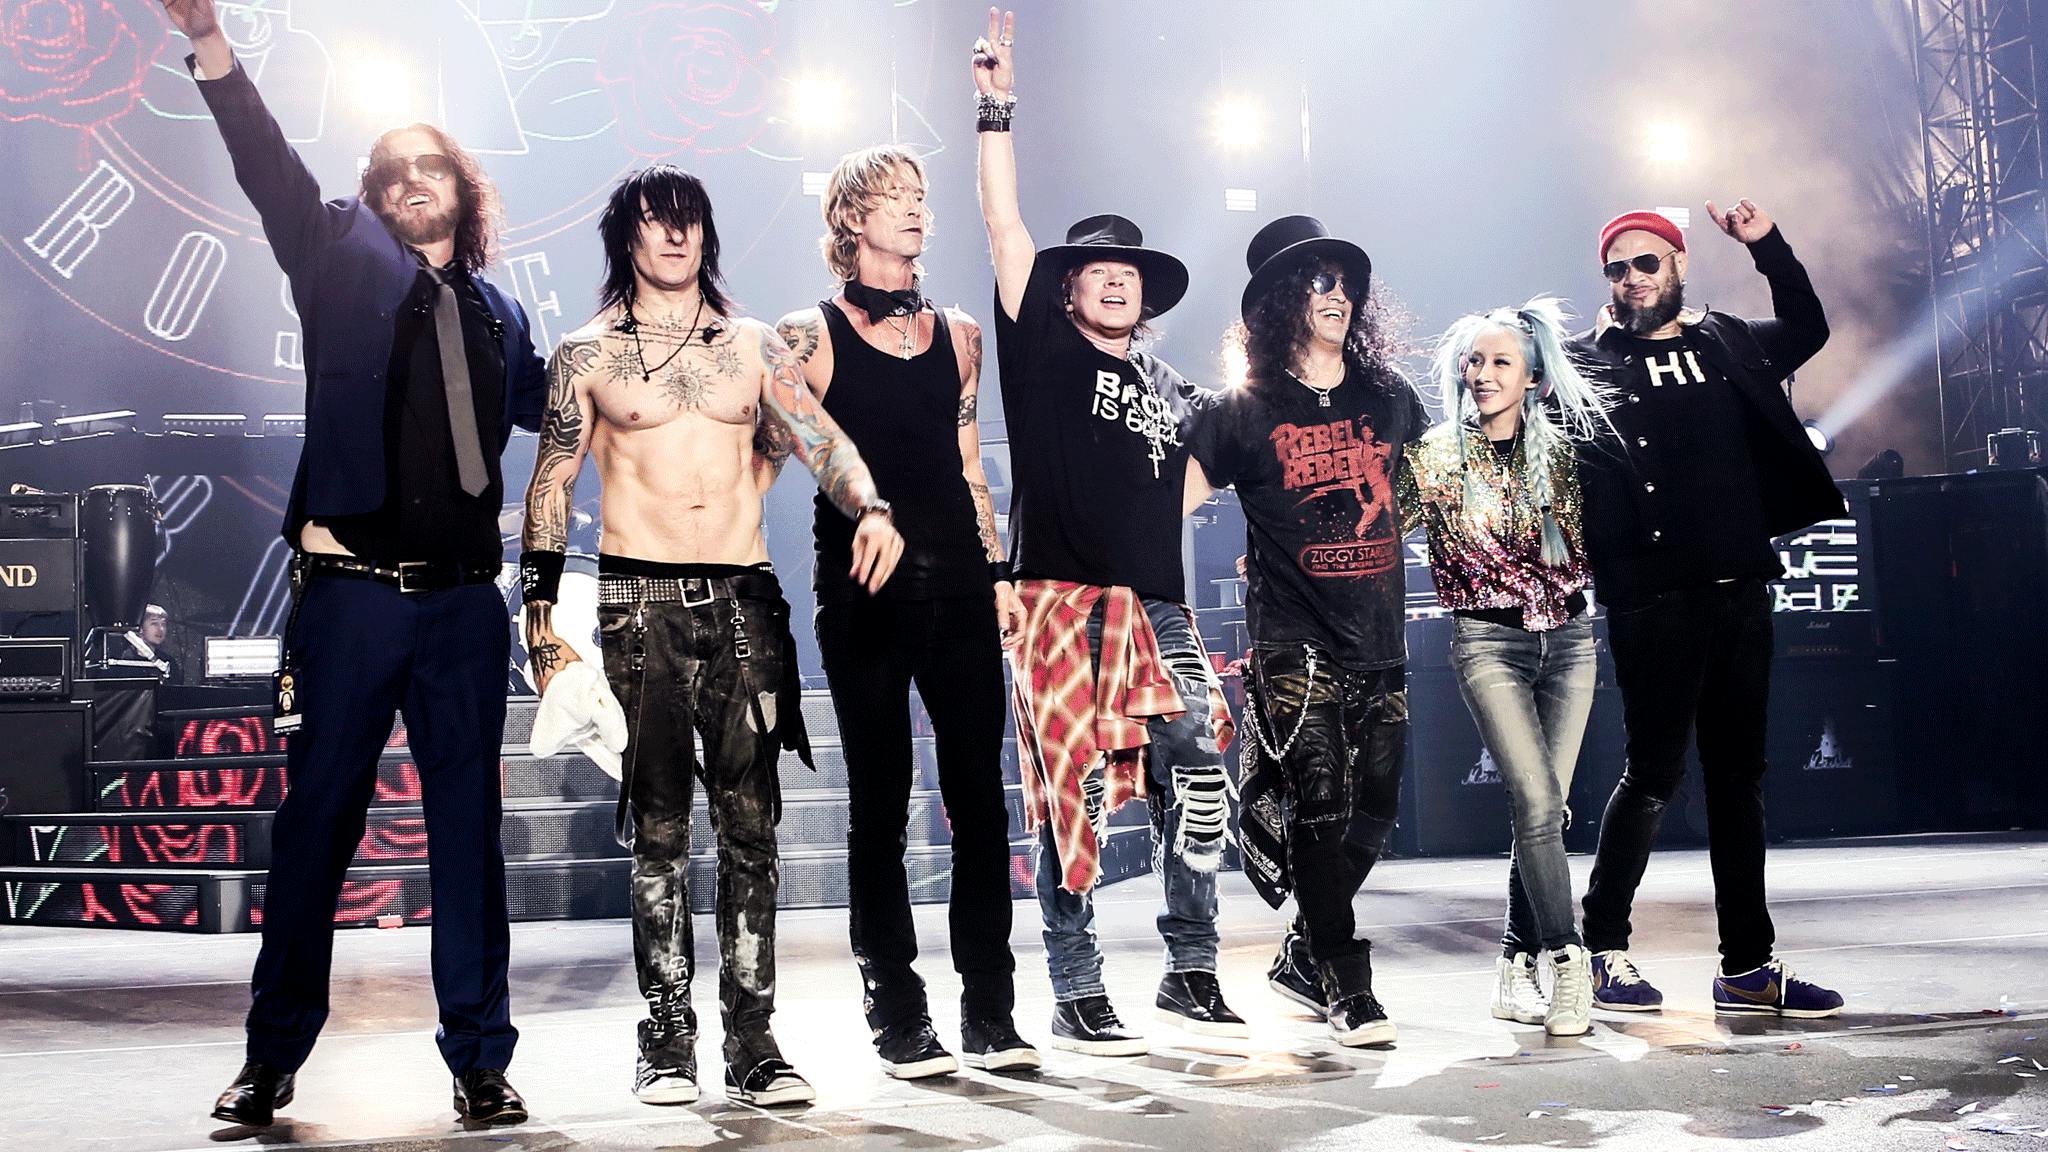 More names announced for Guns N’ Roses’ BST Hyde Park show